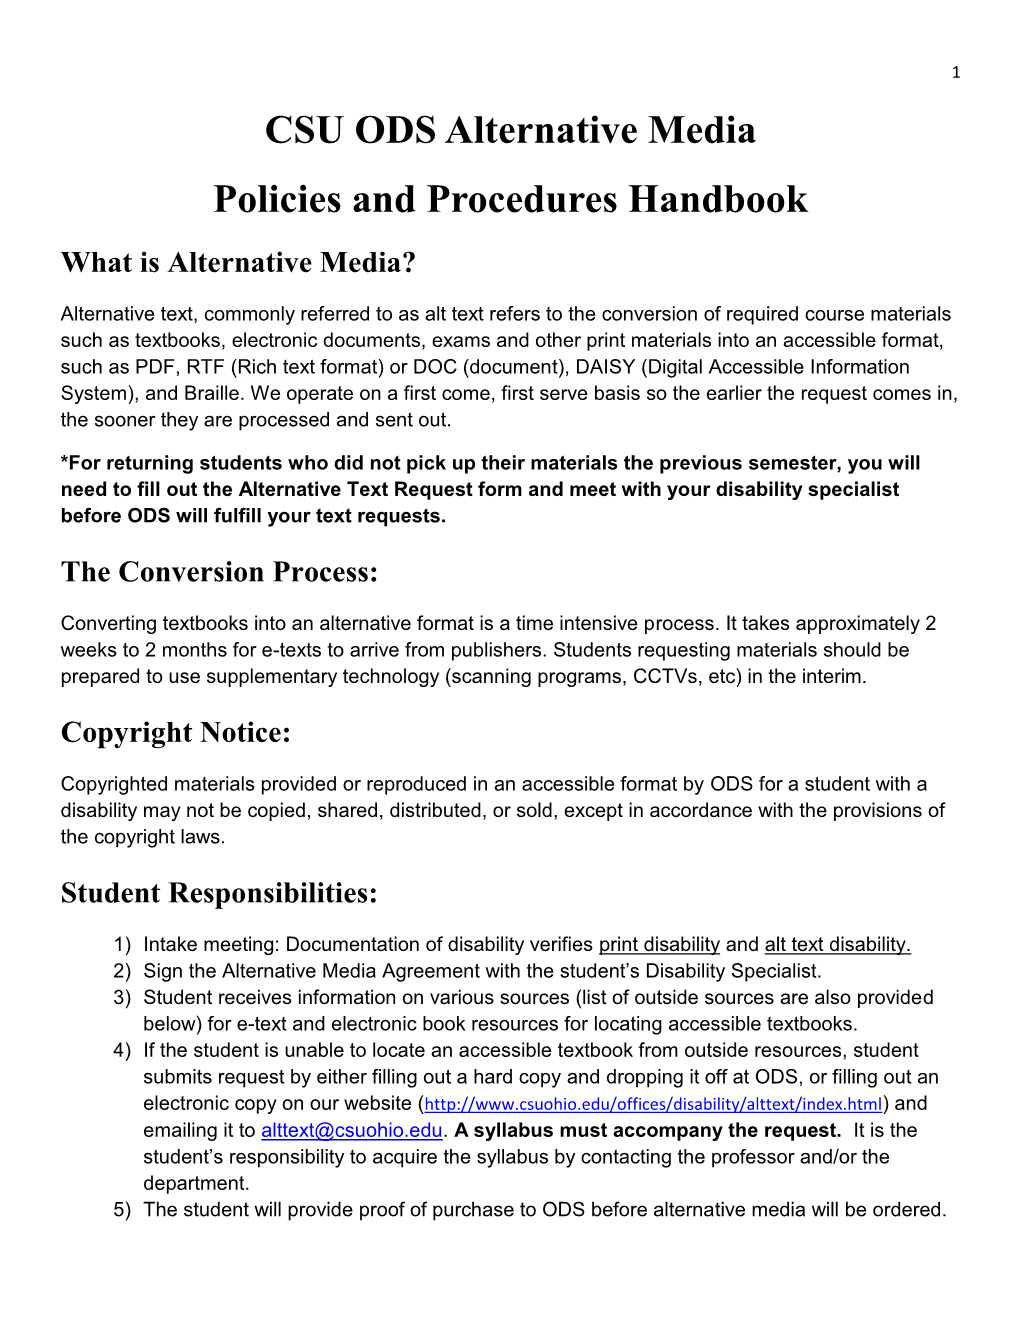 Alternative Media Policies and Procedures Handbook What Is Alternative Media?